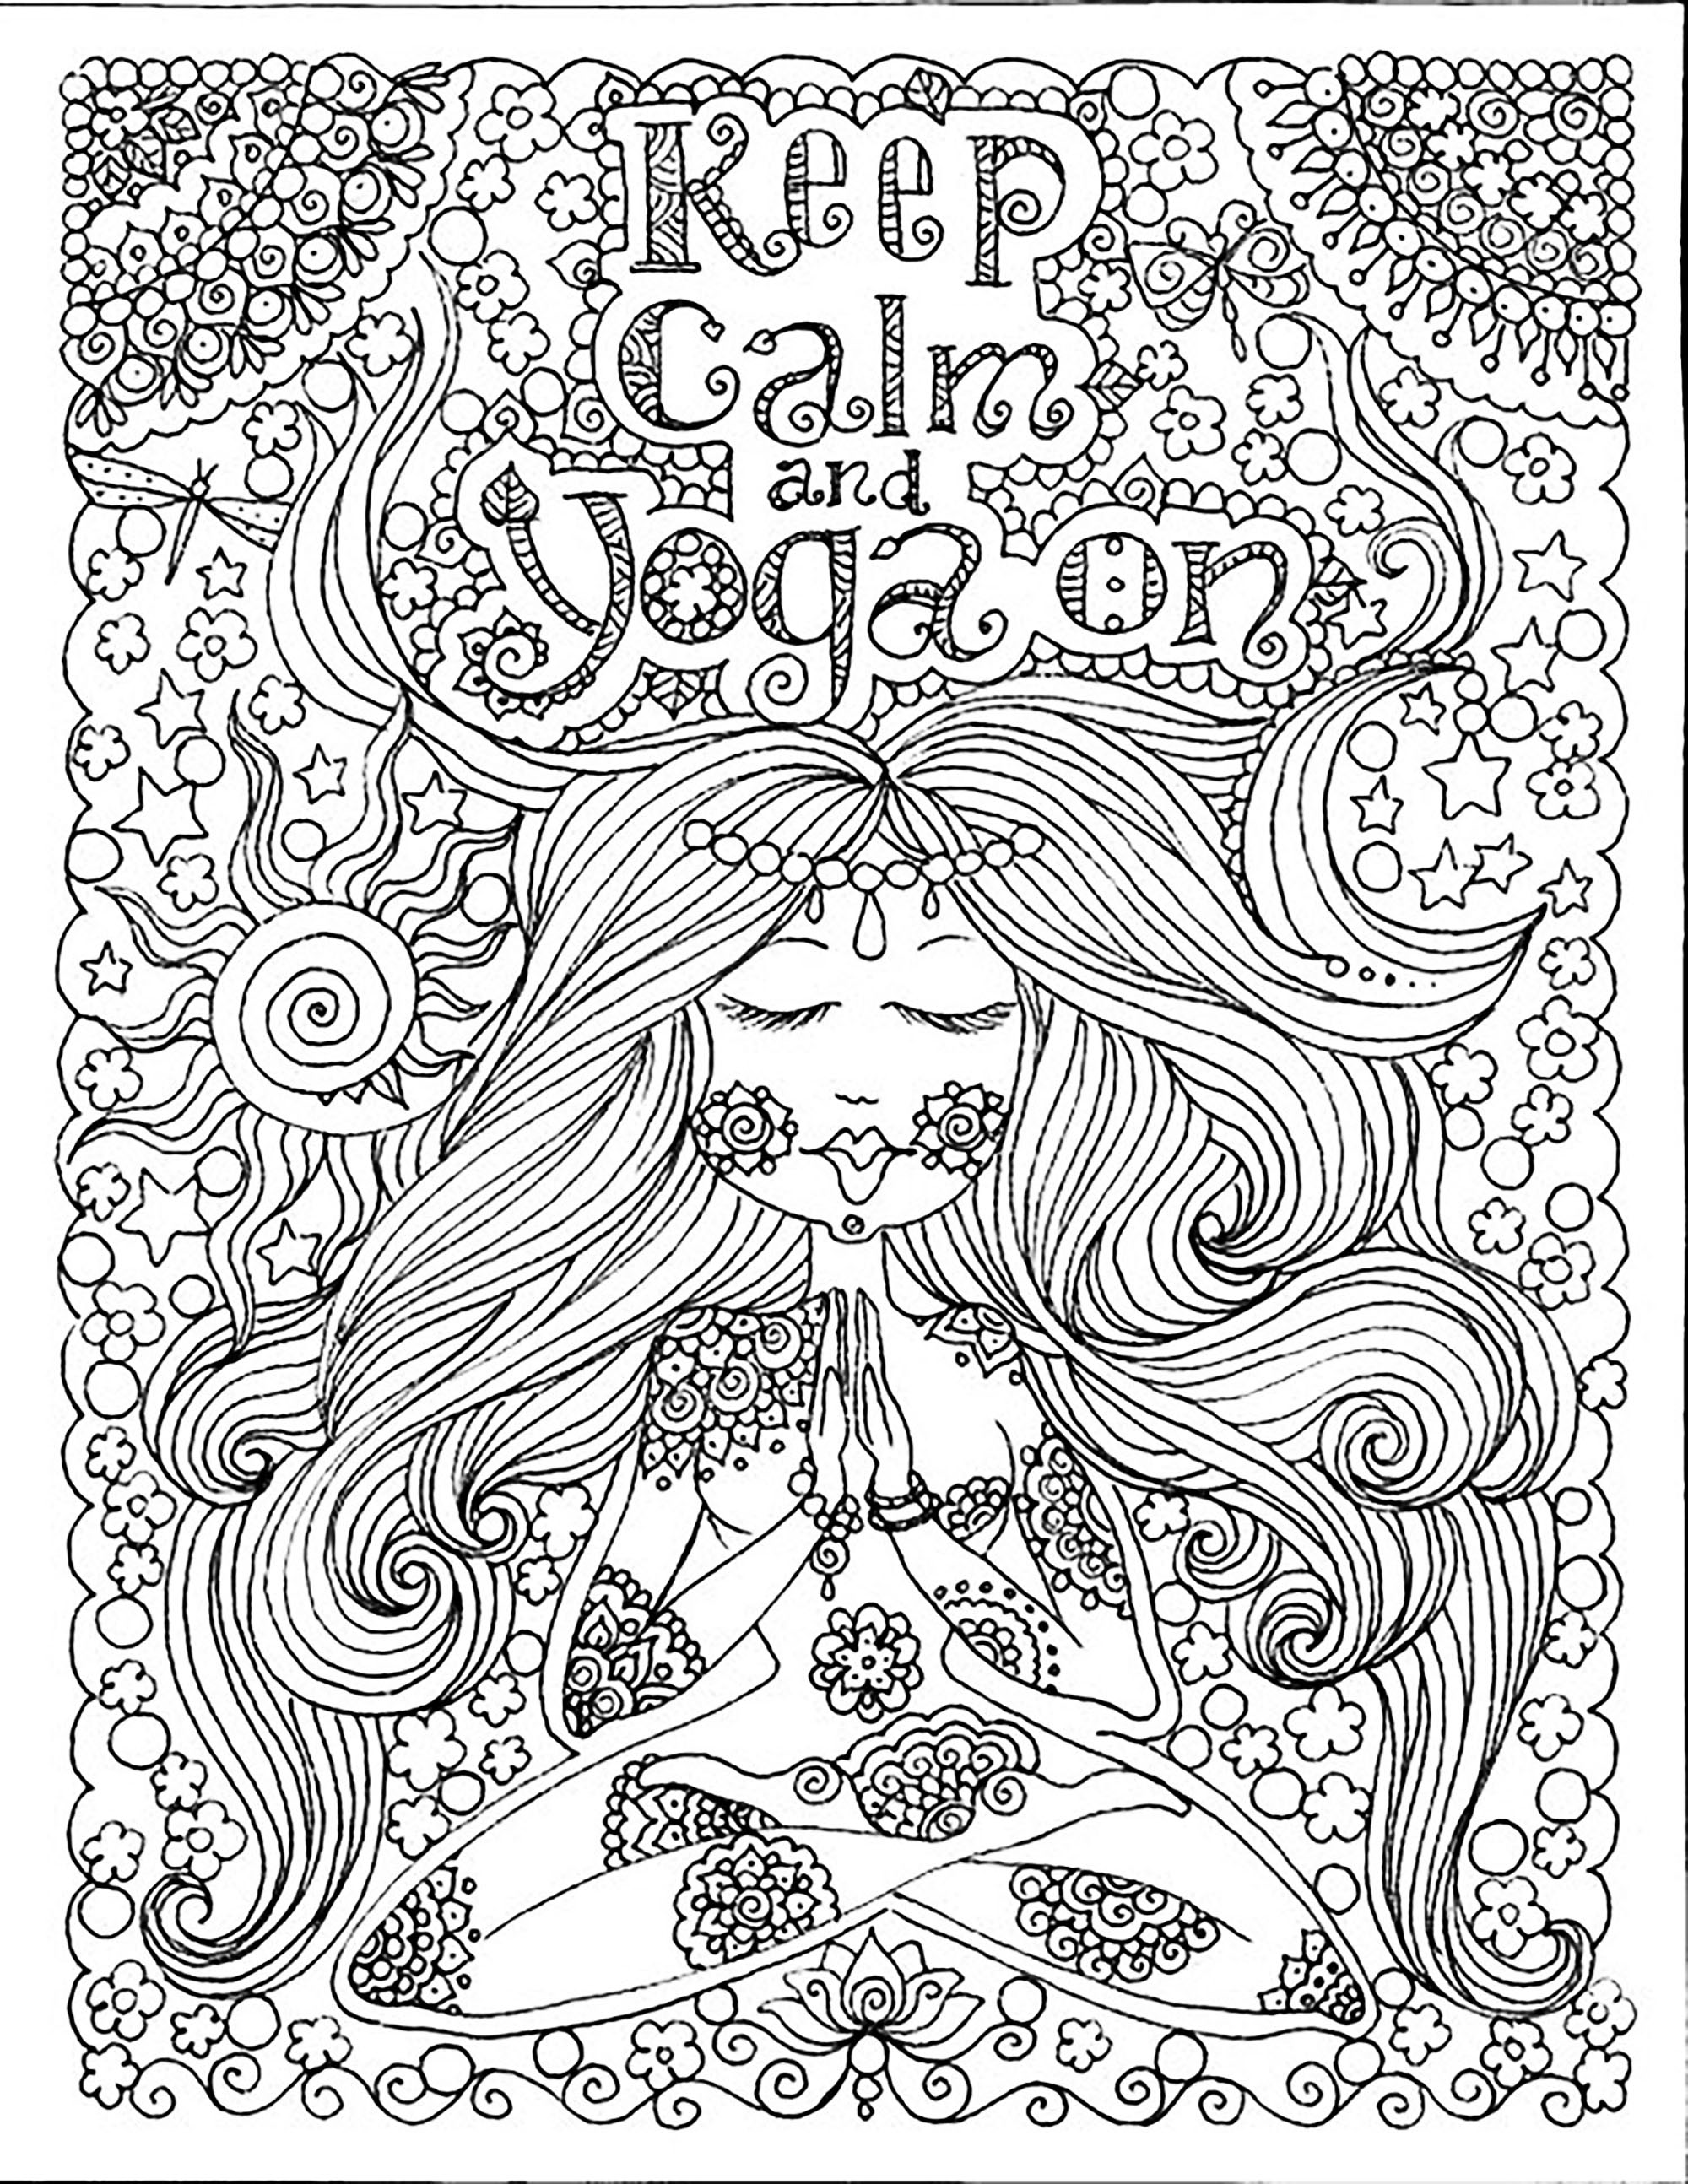 Keep calm and do Yoga, Artist : Deborah Muller